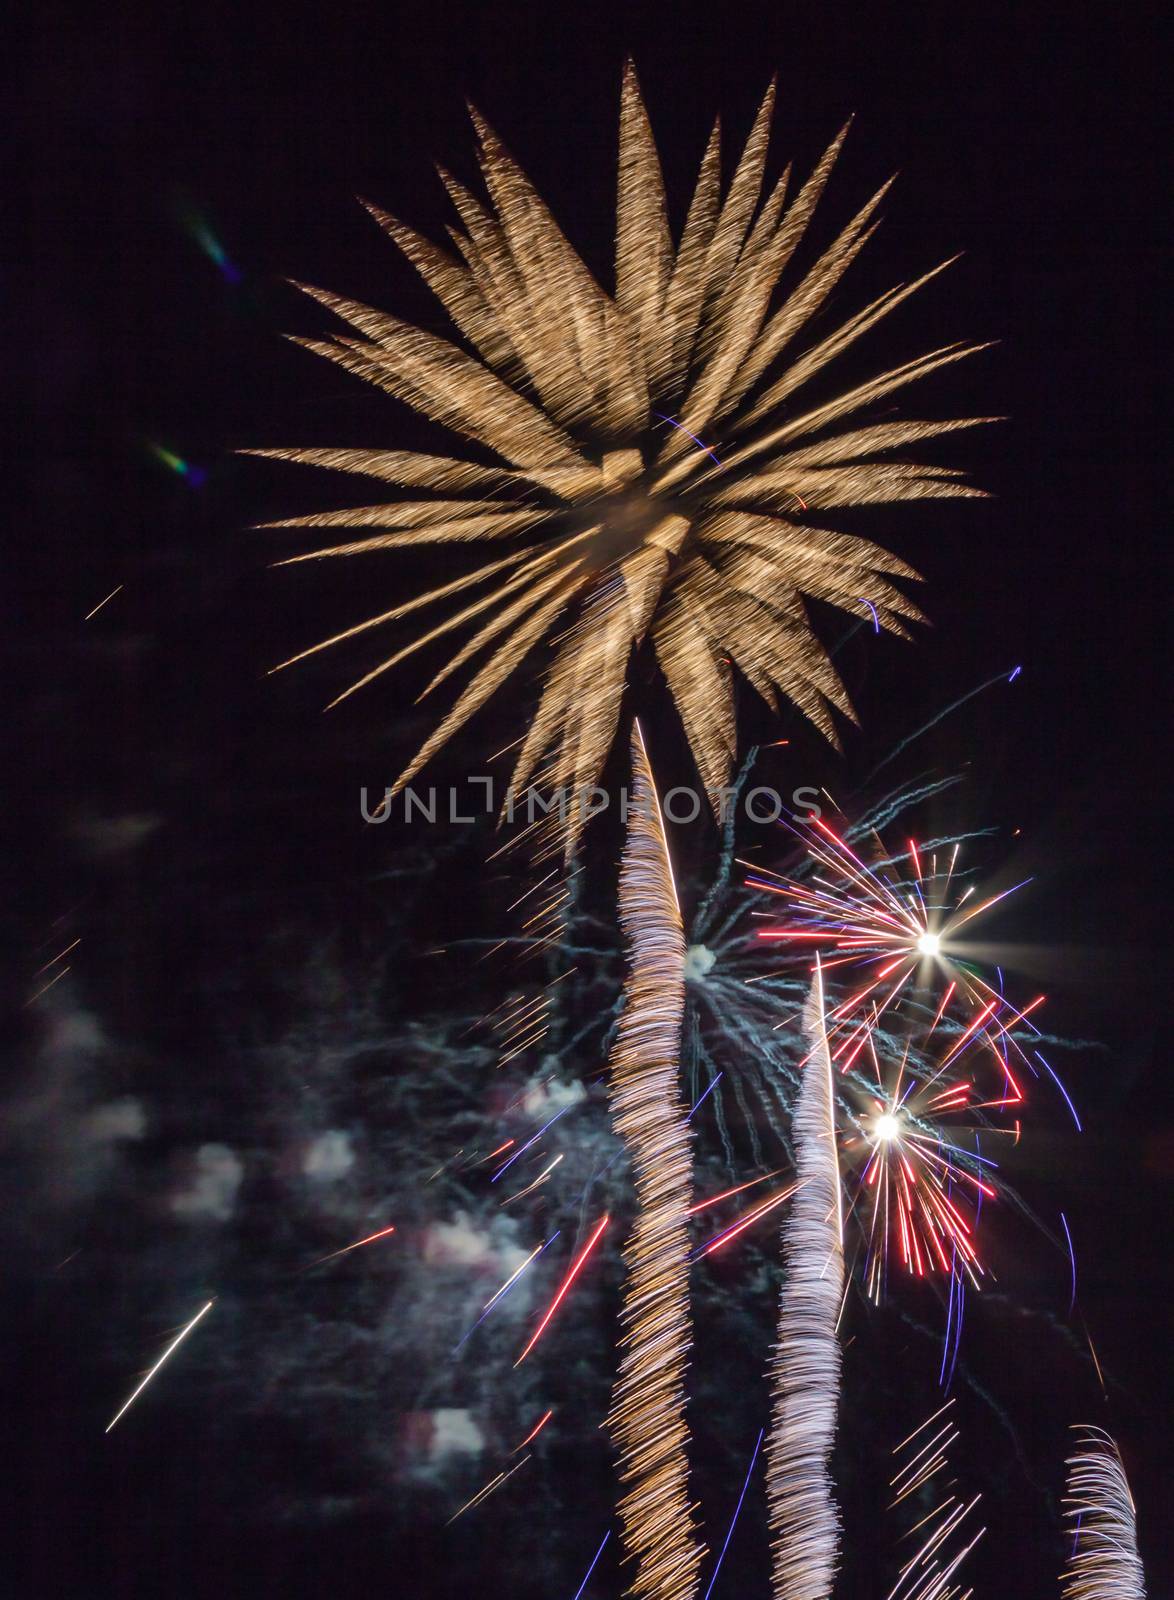 Fourth of July fireworks celebration